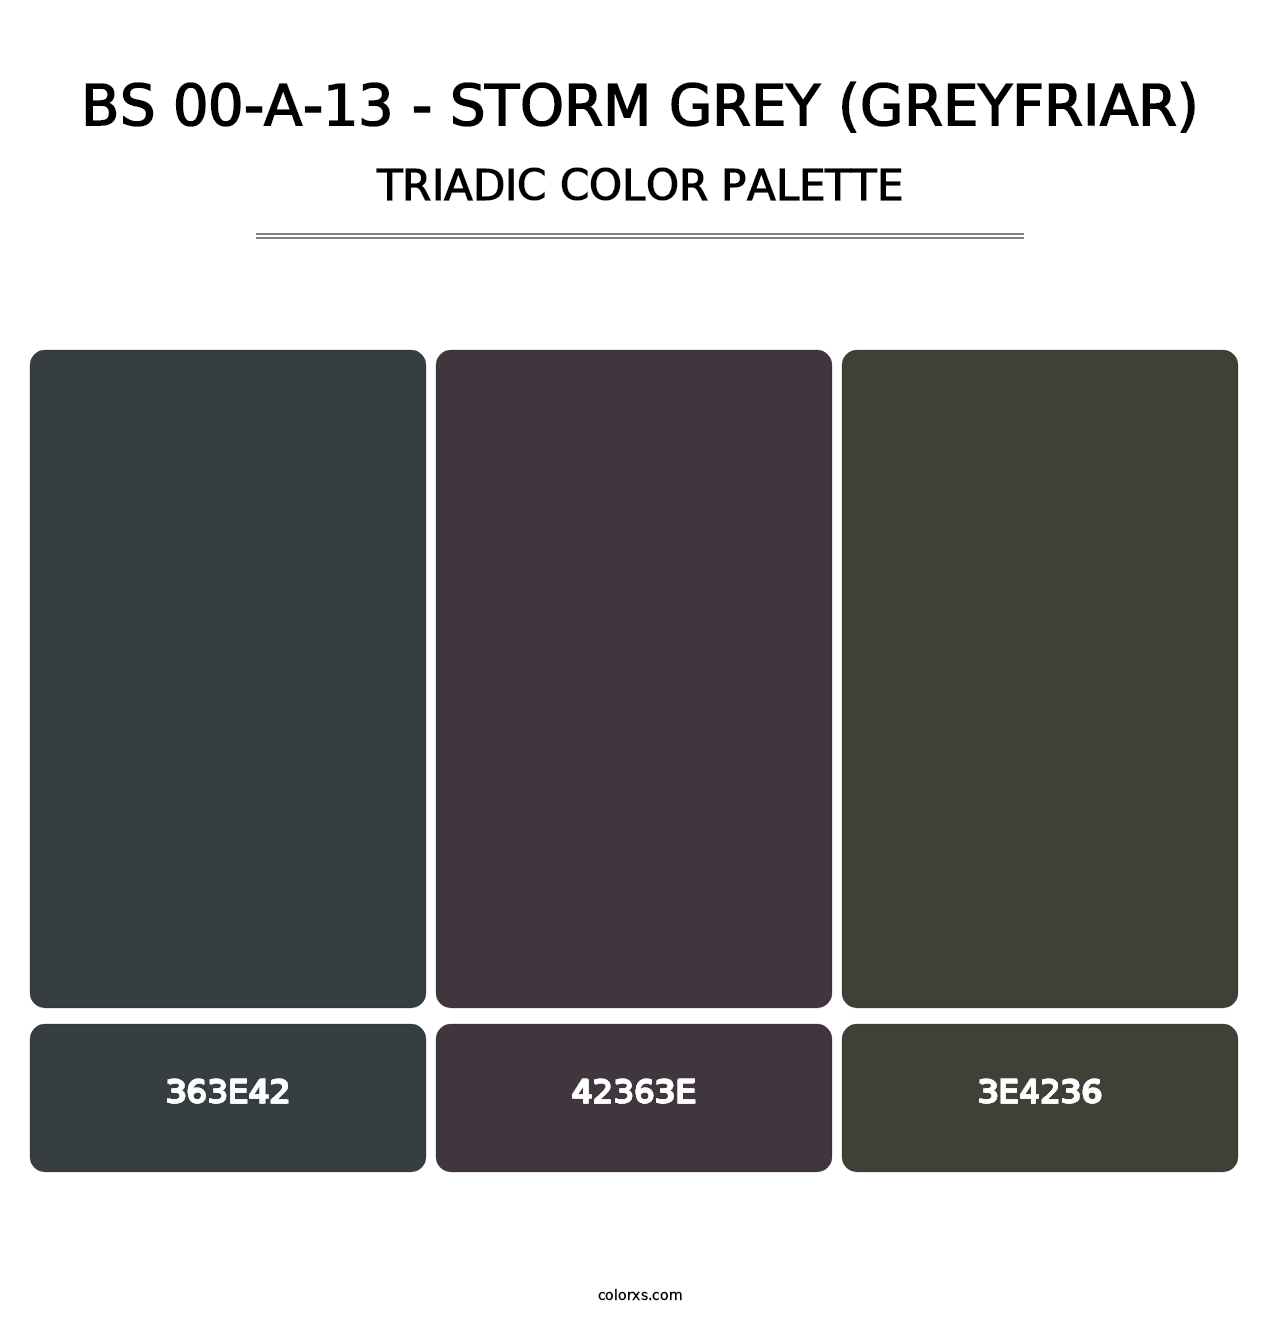 BS 00-A-13 - Storm Grey (Greyfriar) - Triadic Color Palette